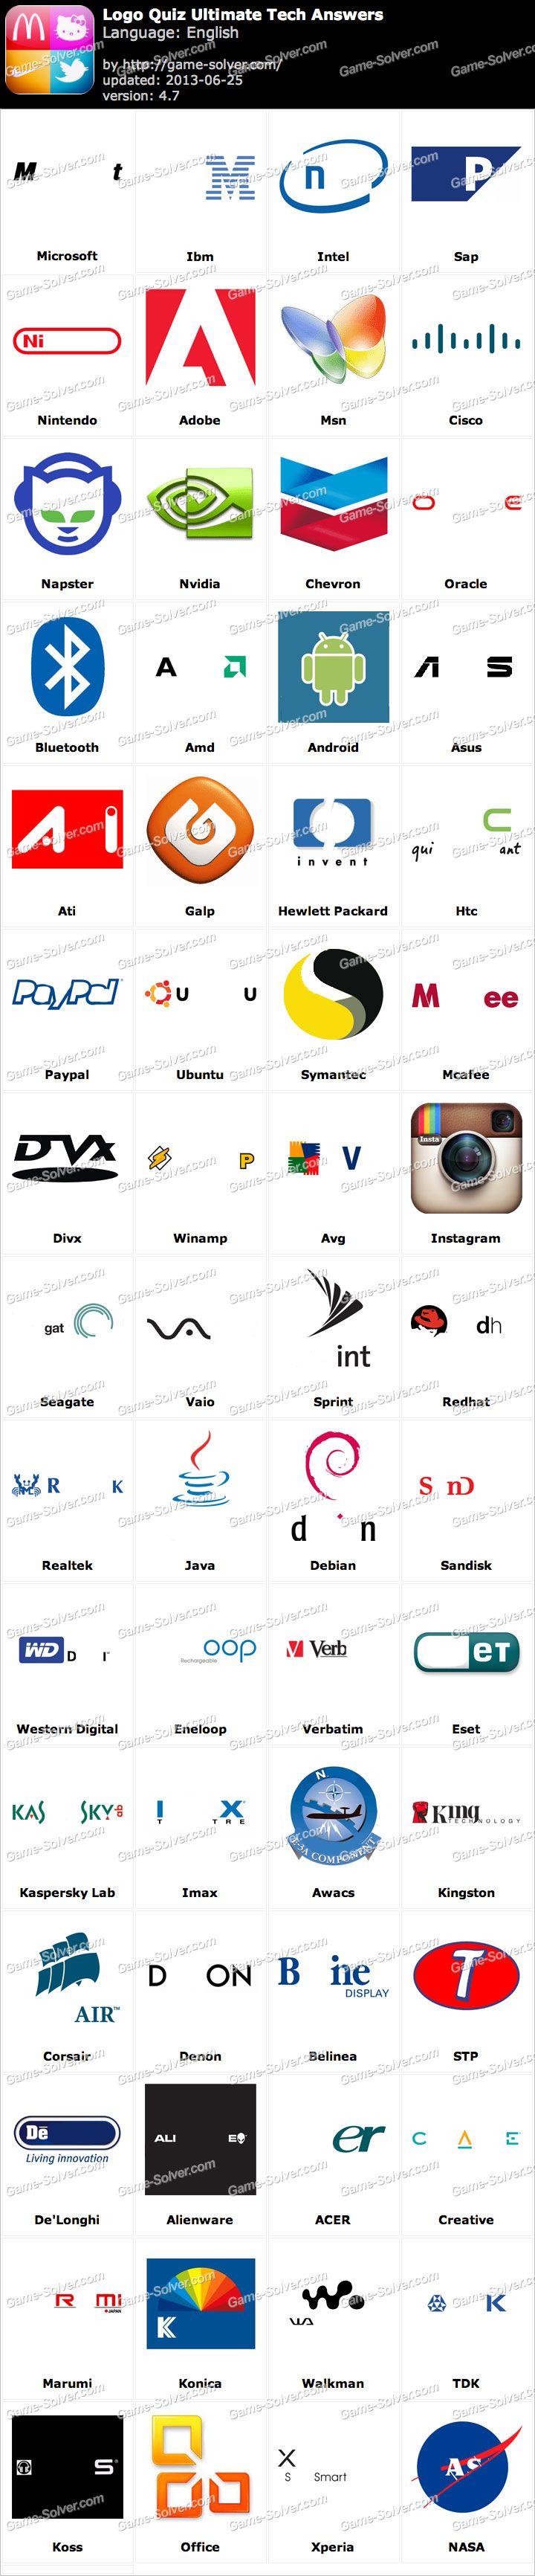 Portuguese Corporation Tech Logo - Logo Quiz Ultimate Tech Answers